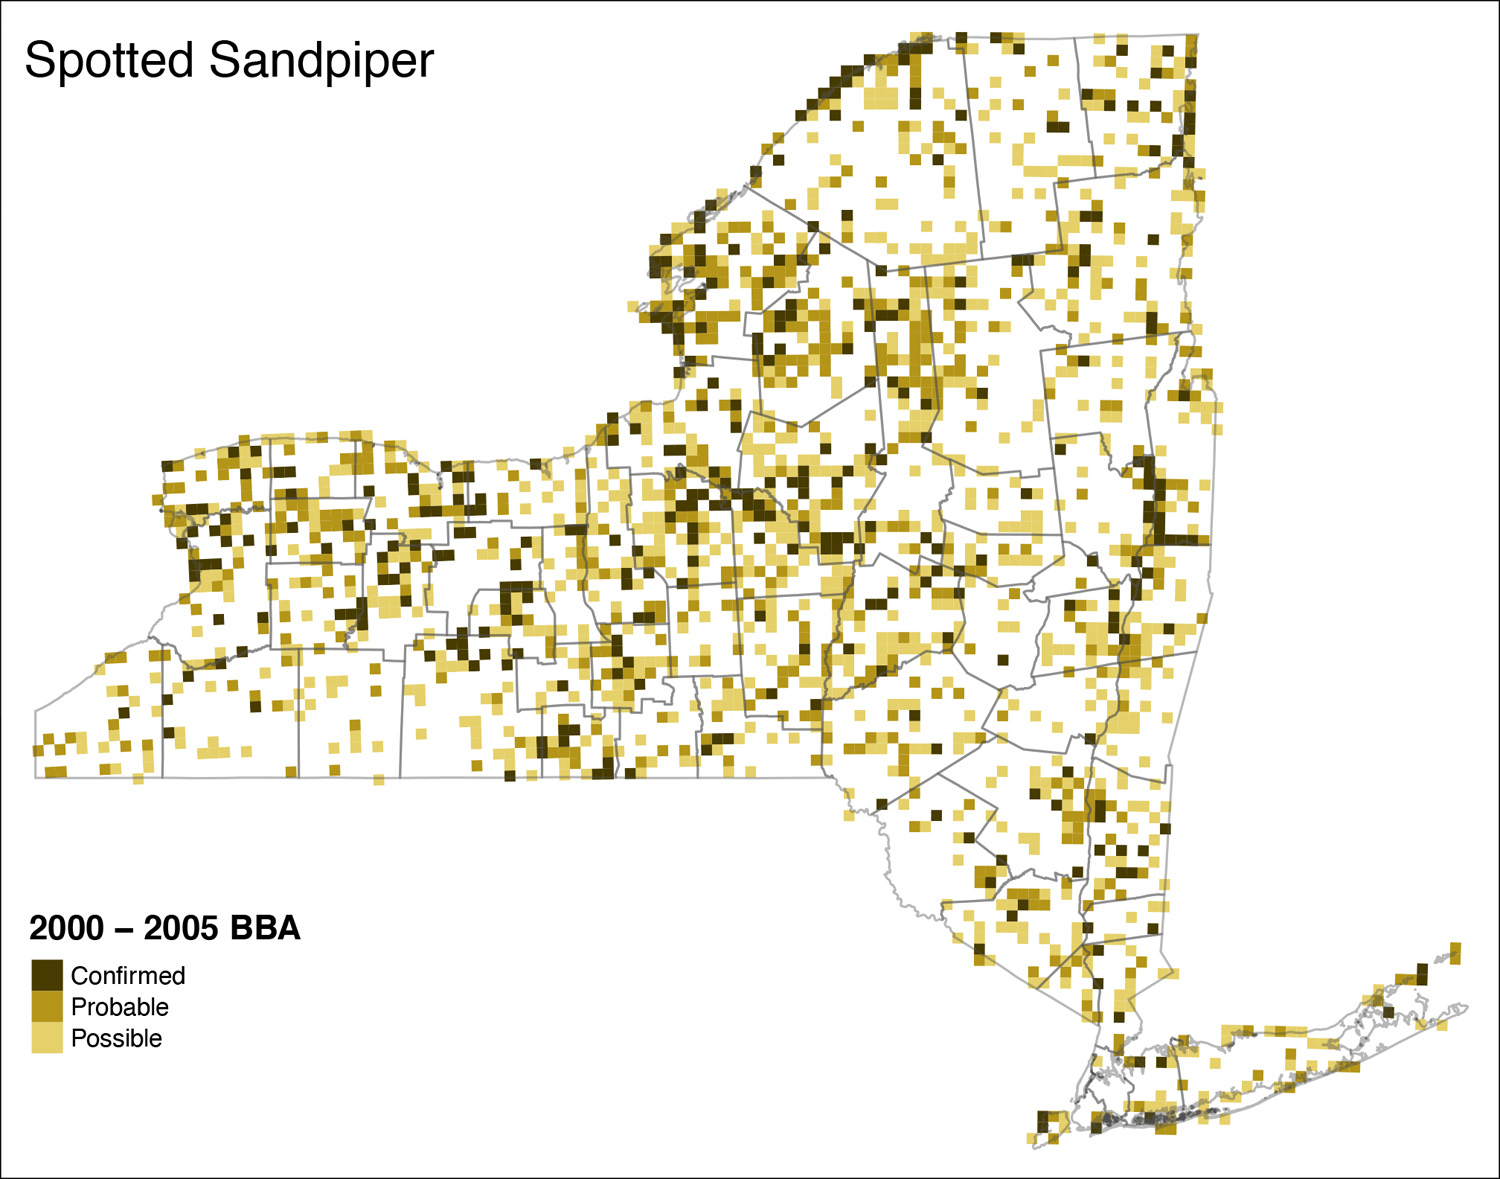 Spotted Sandpiper Atlas 2 Distribution